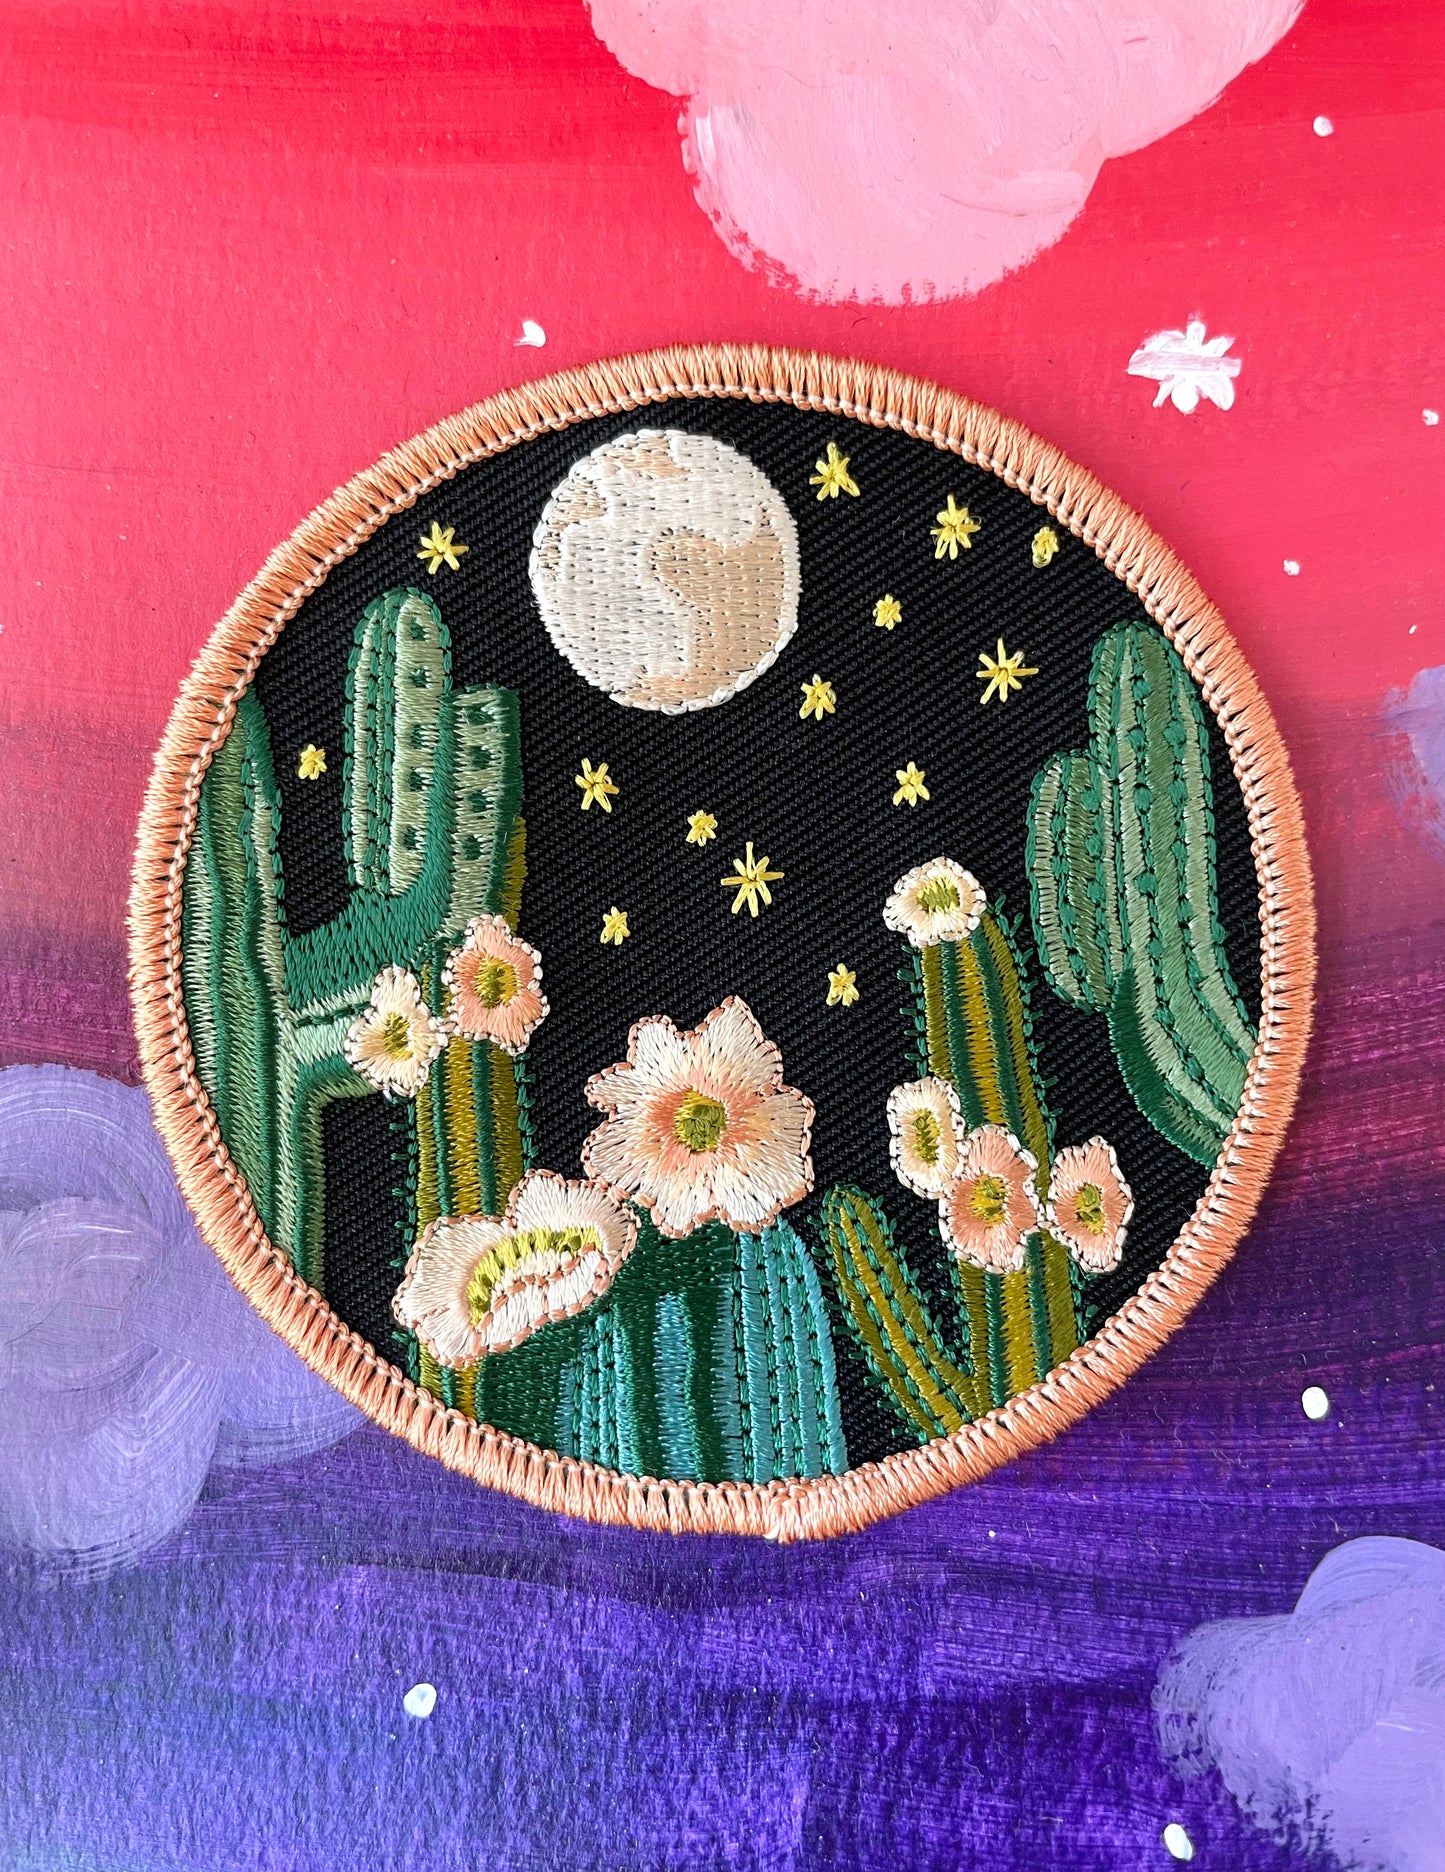 starry night cactus patch